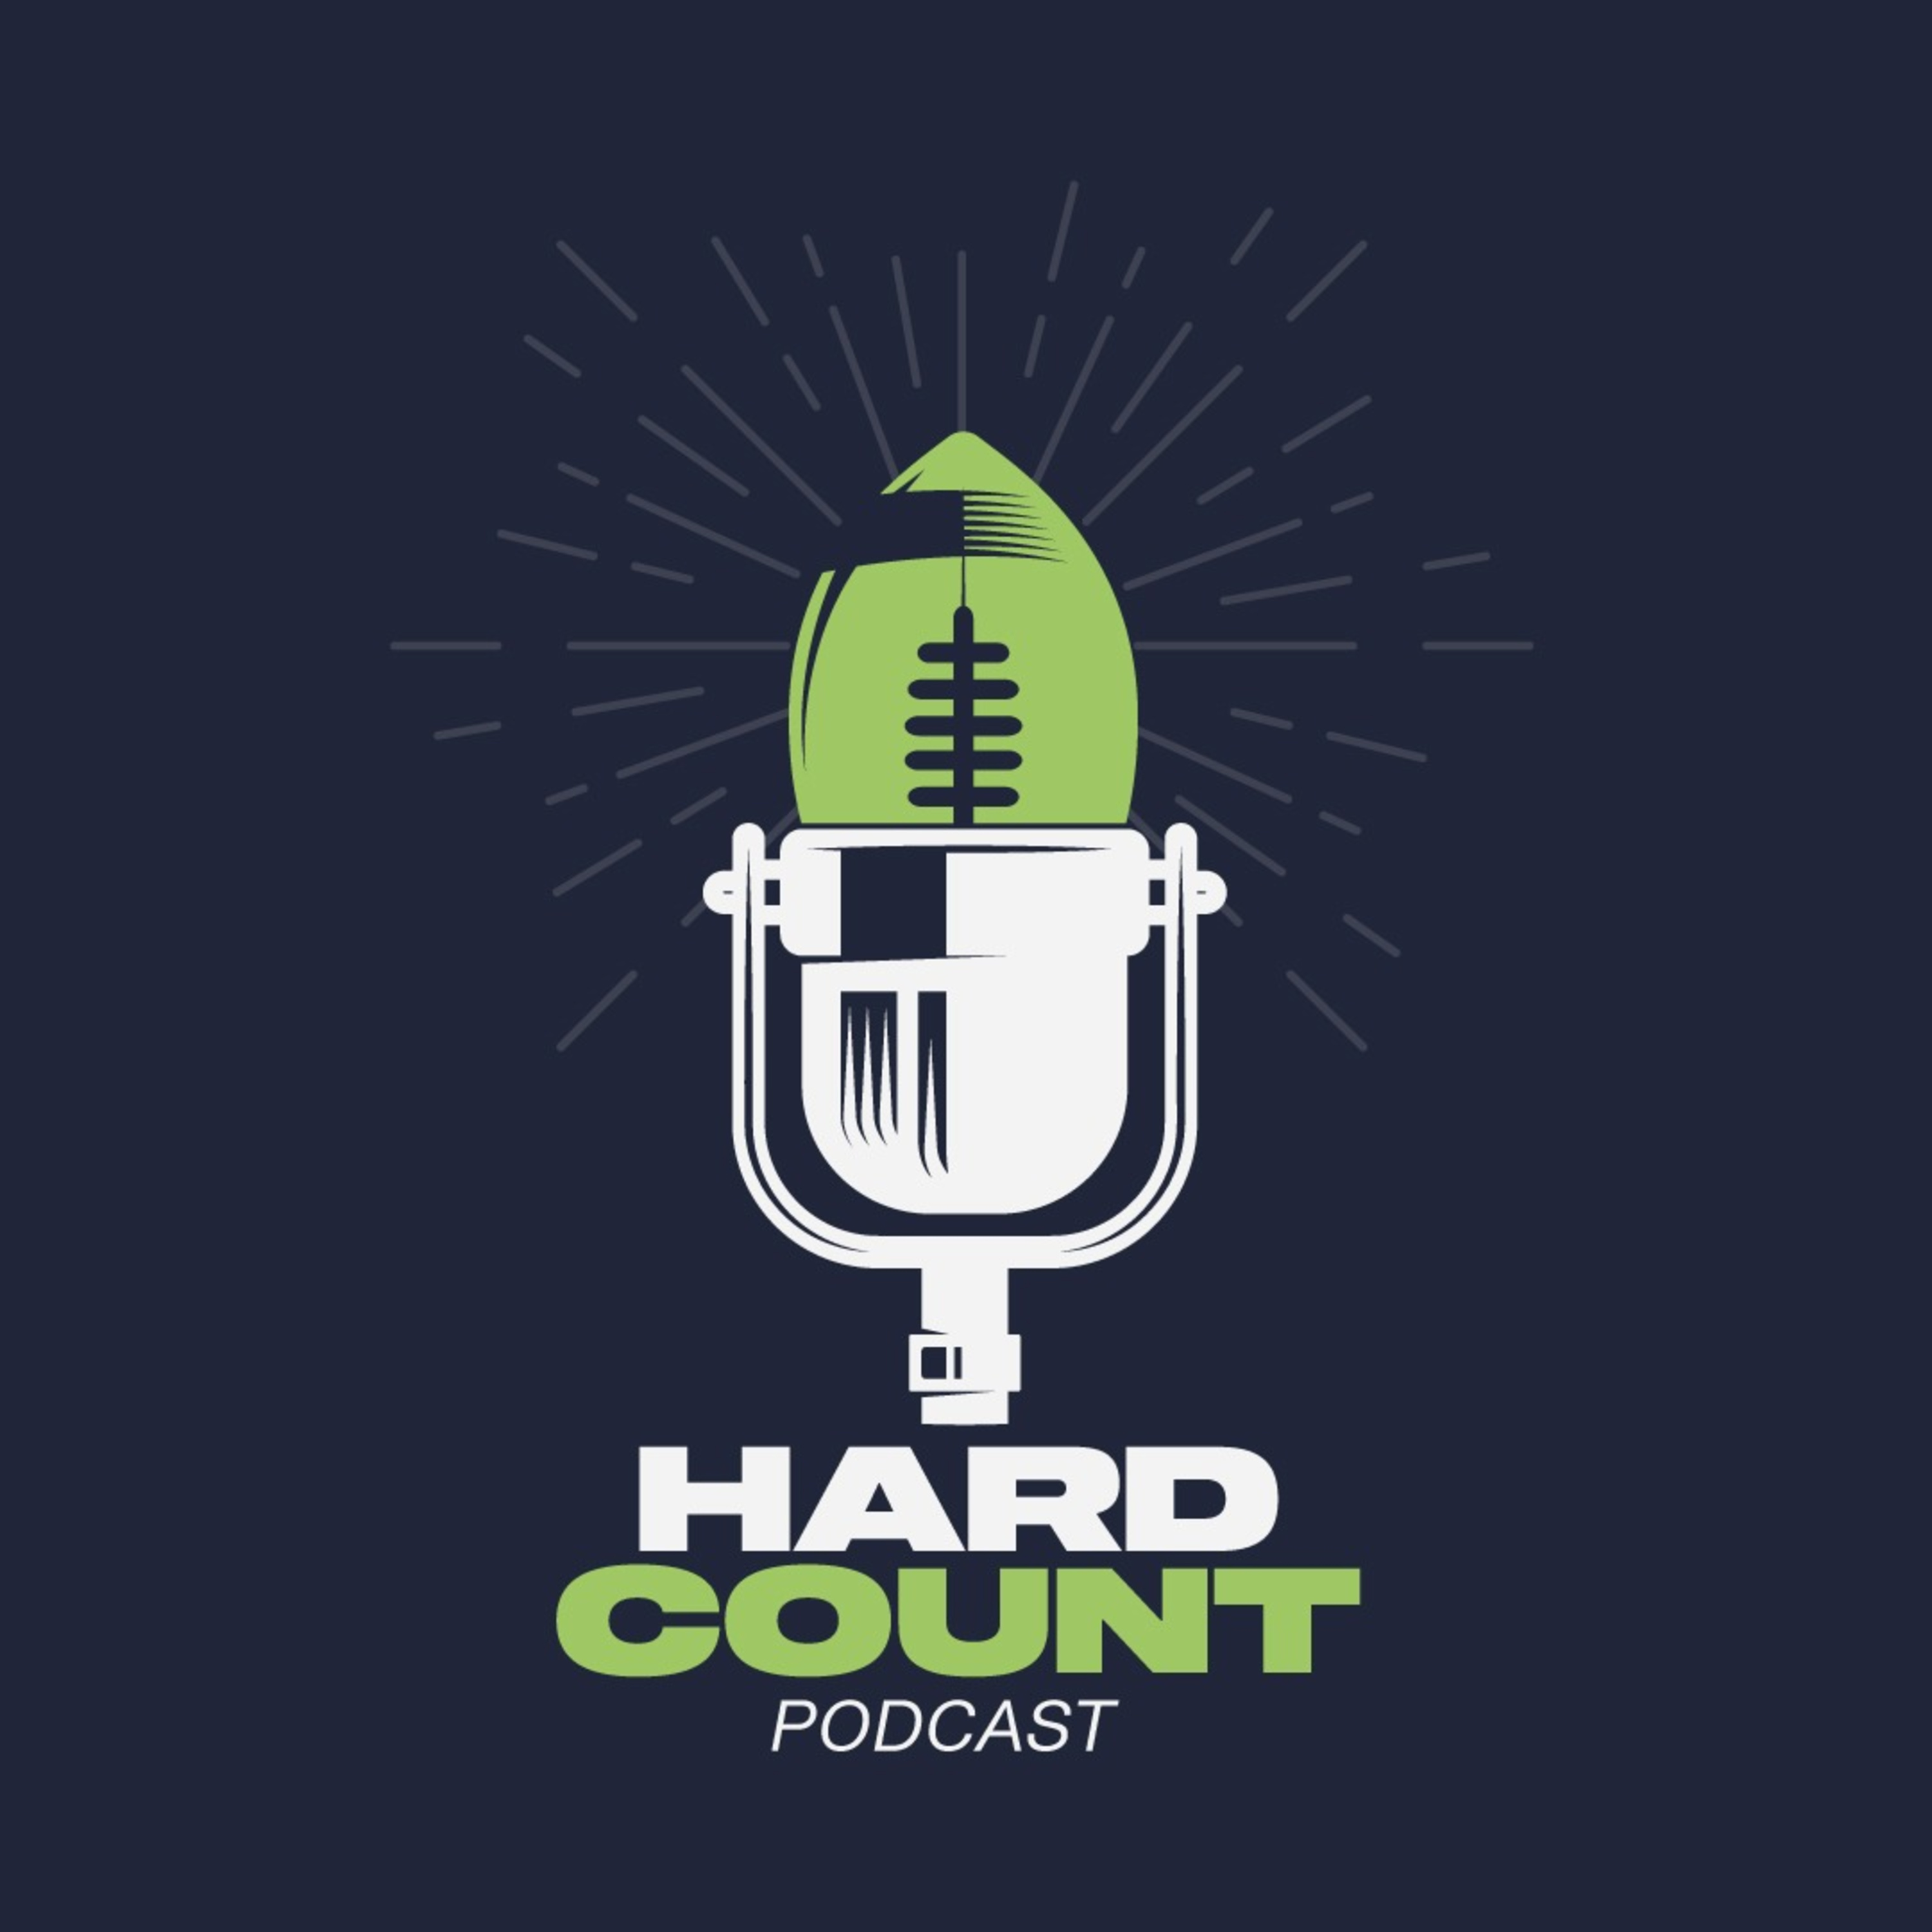 Hard Count Podcast - Episódio 157 - Novos Head Coaches NFL e Franchise Tag